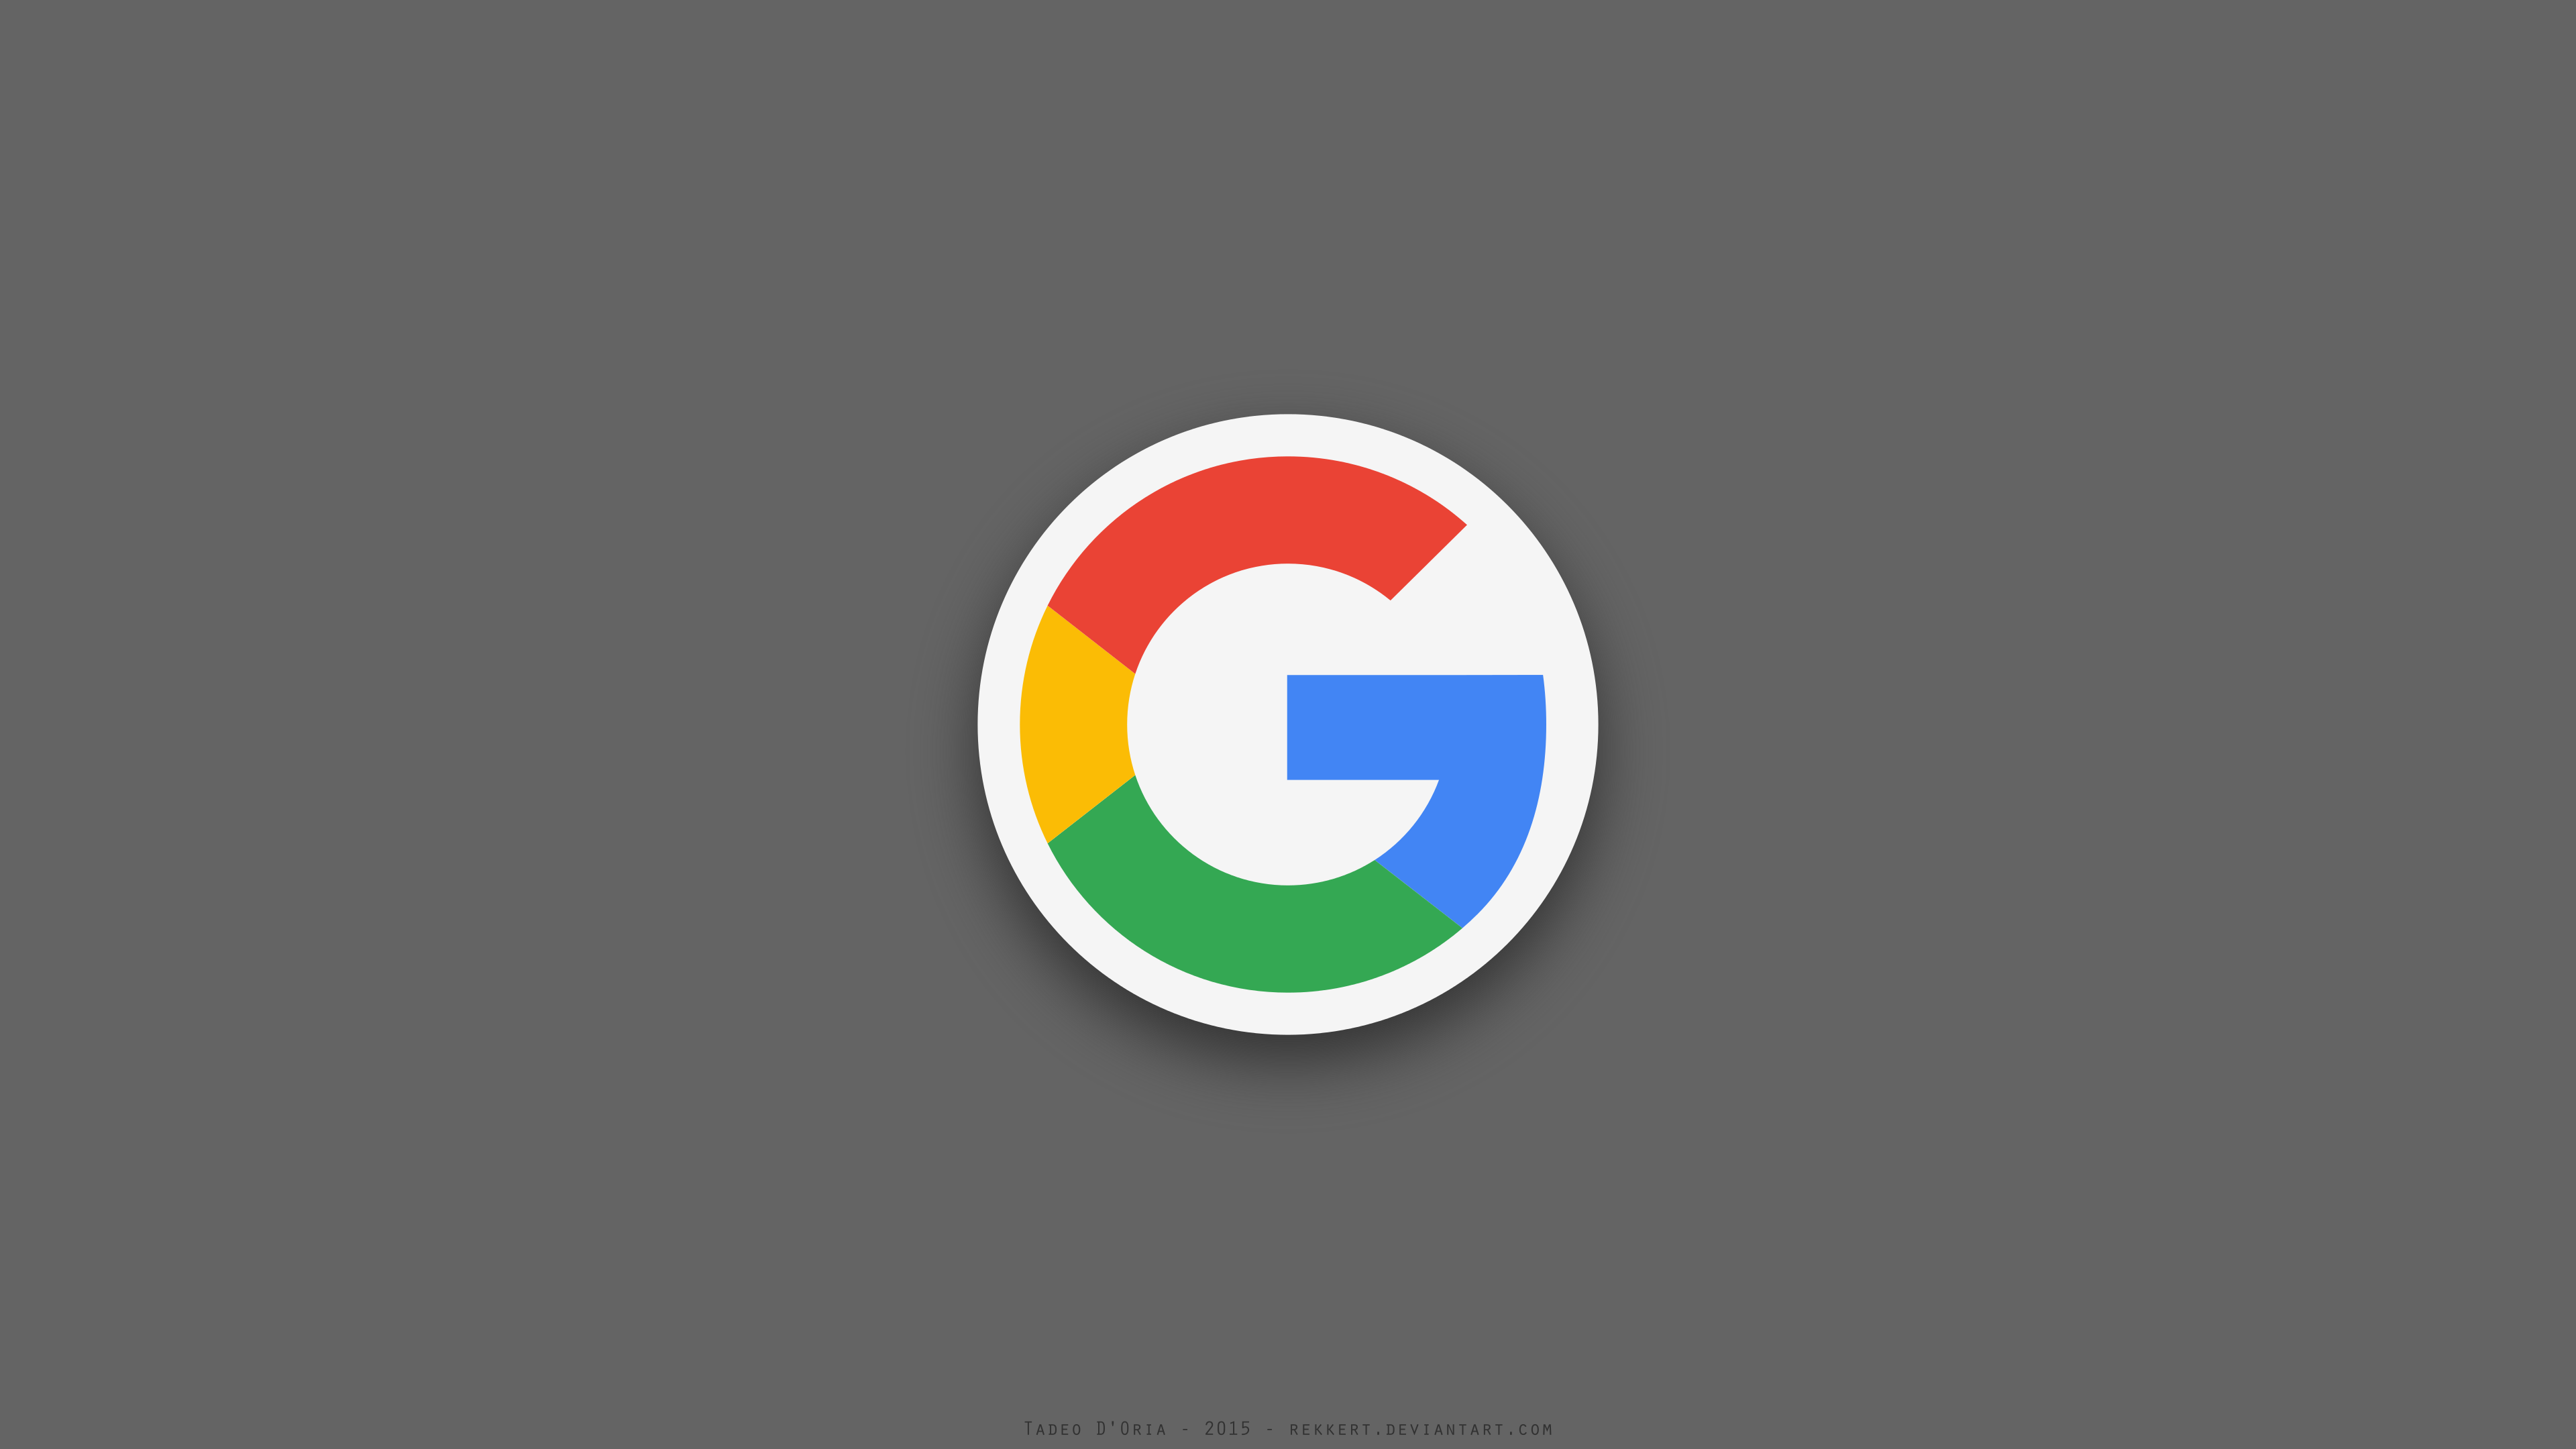 Google Wallpapers App দারুন সব ফিচারস এখনই ডাউনলোড করে নিন